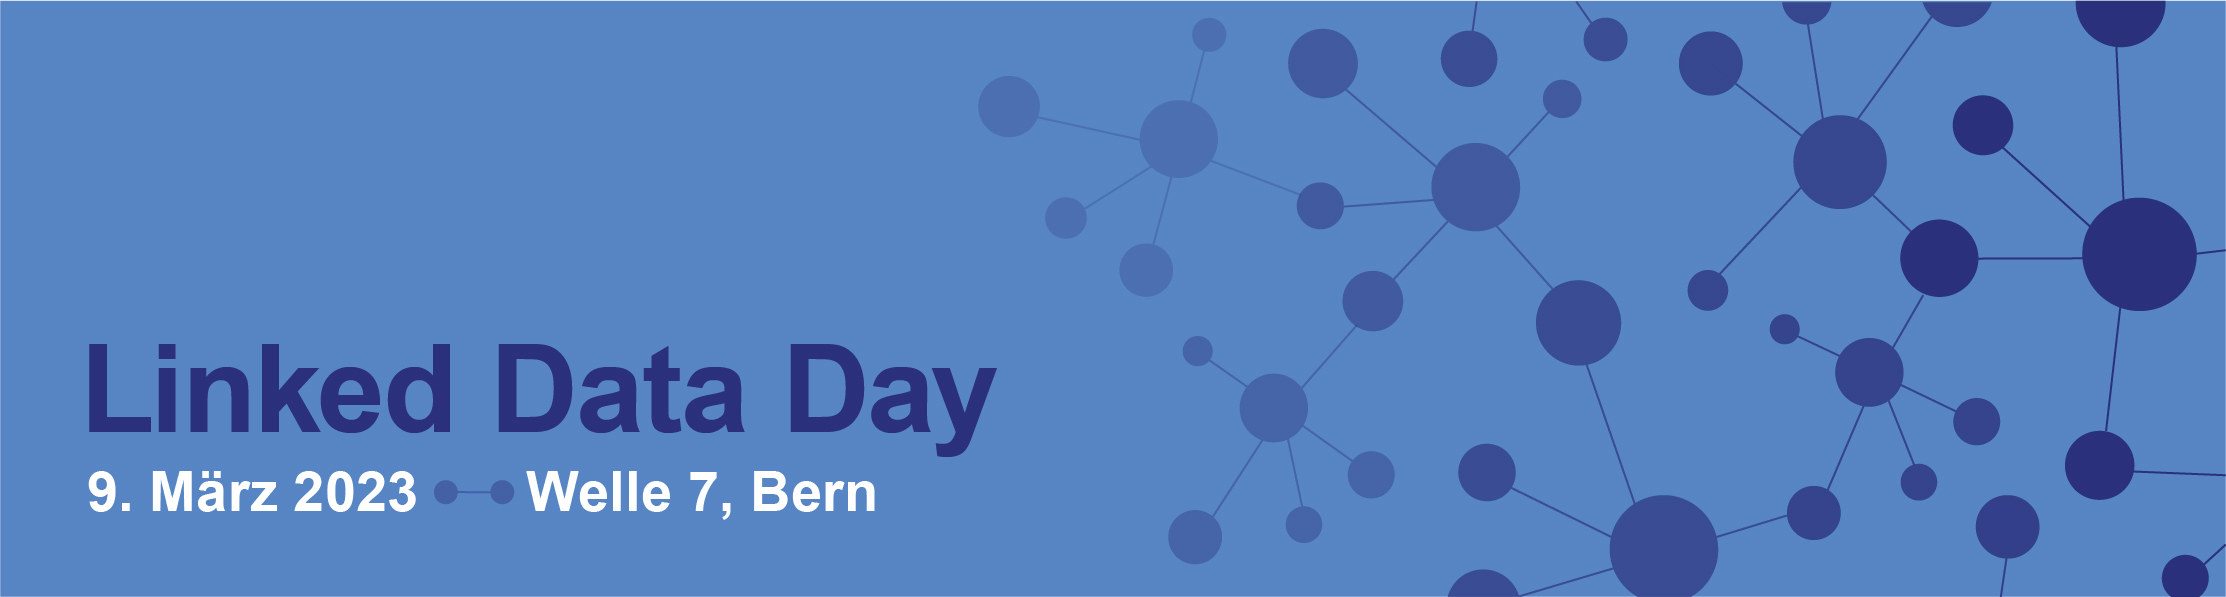 Linked Data Day, 09.03.2023, Welle 7, Bern